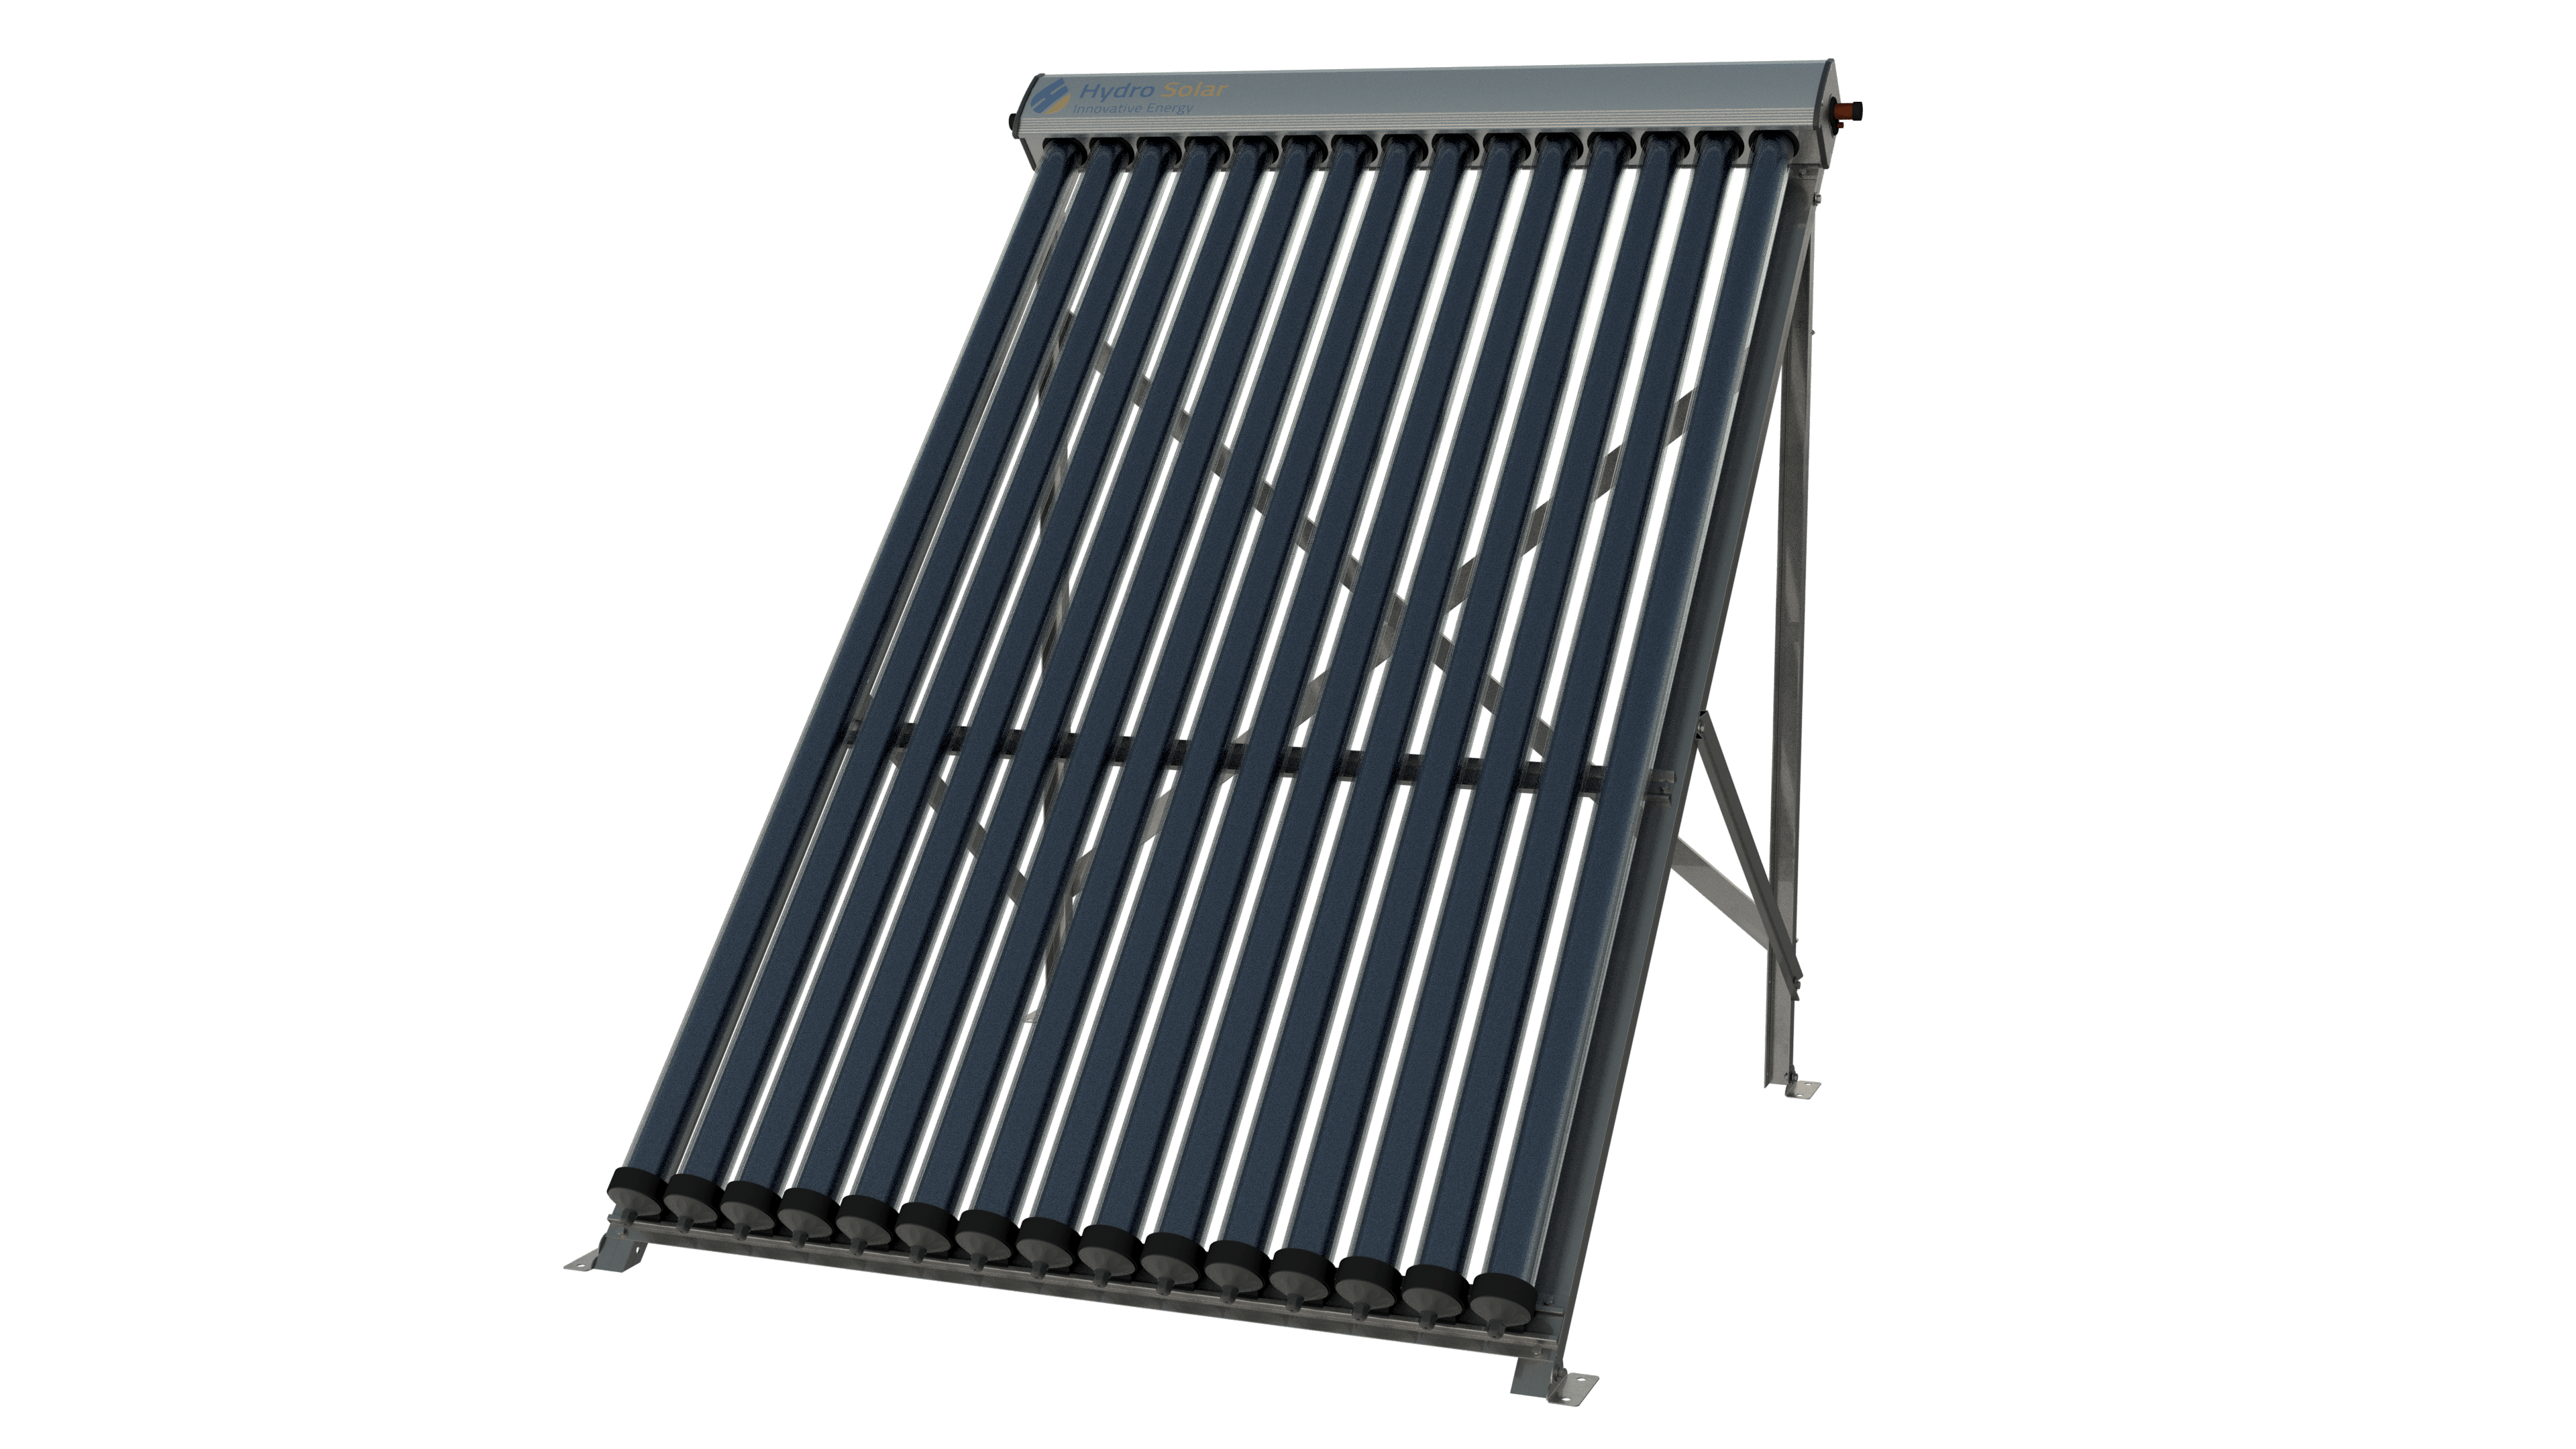 Solar Water Heater Kit - 6x30 Tubes Panel